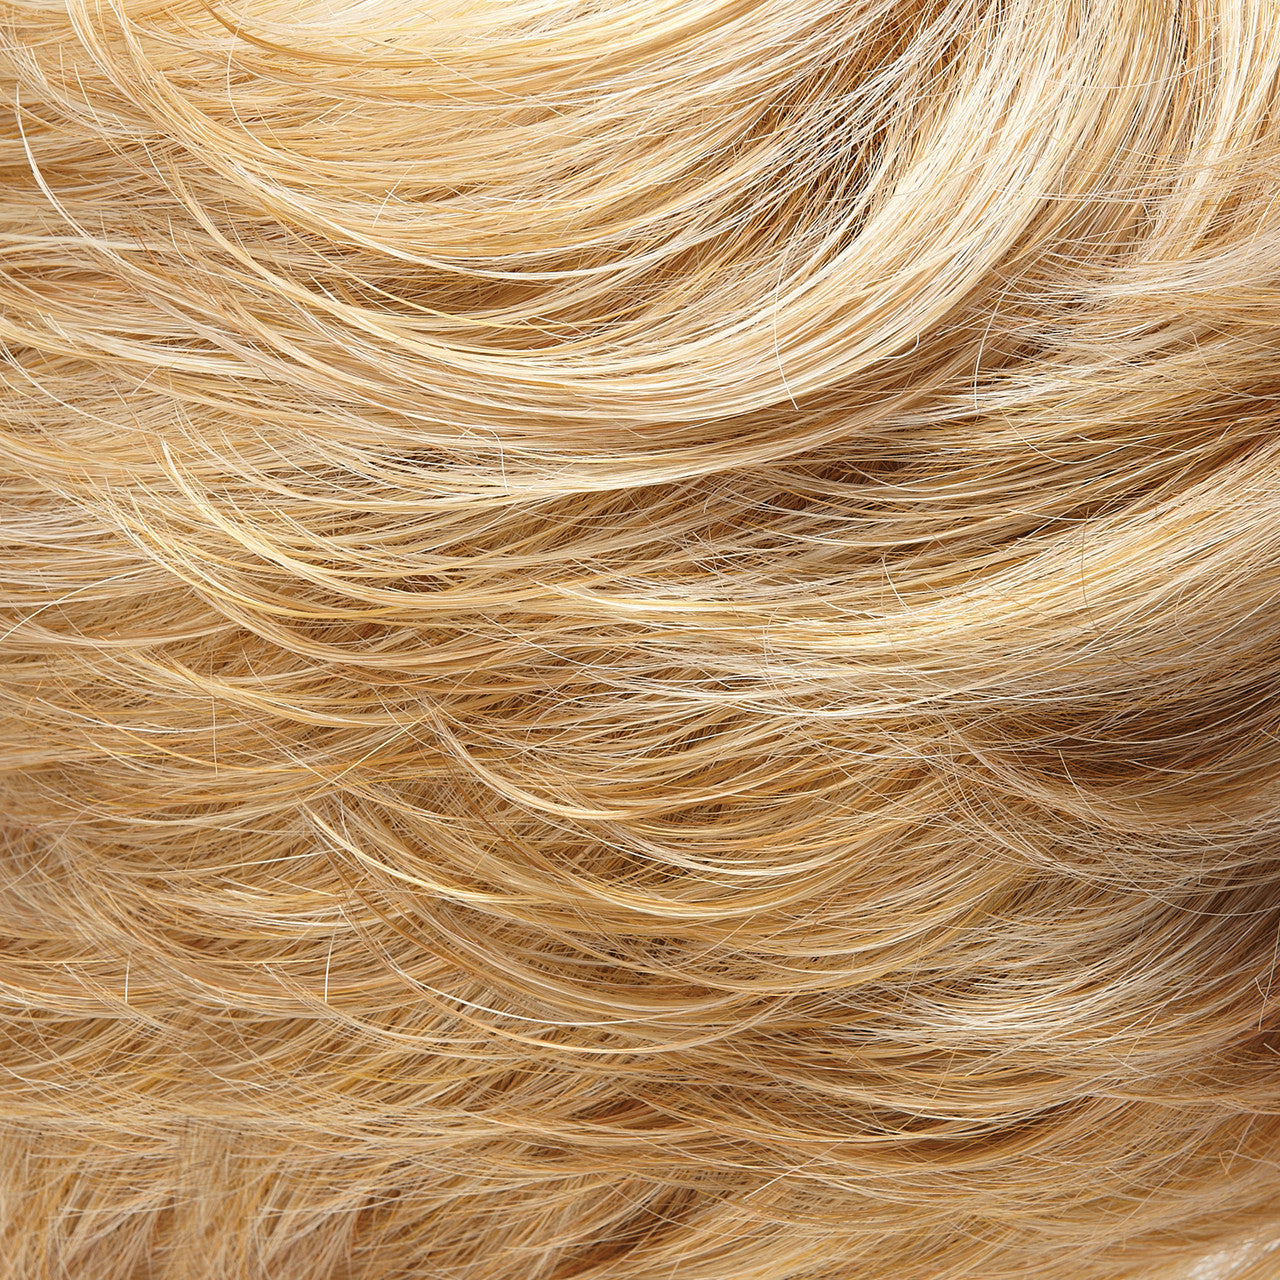 Amanda a Monofilament Top Synthetic Wig by Jon Renau